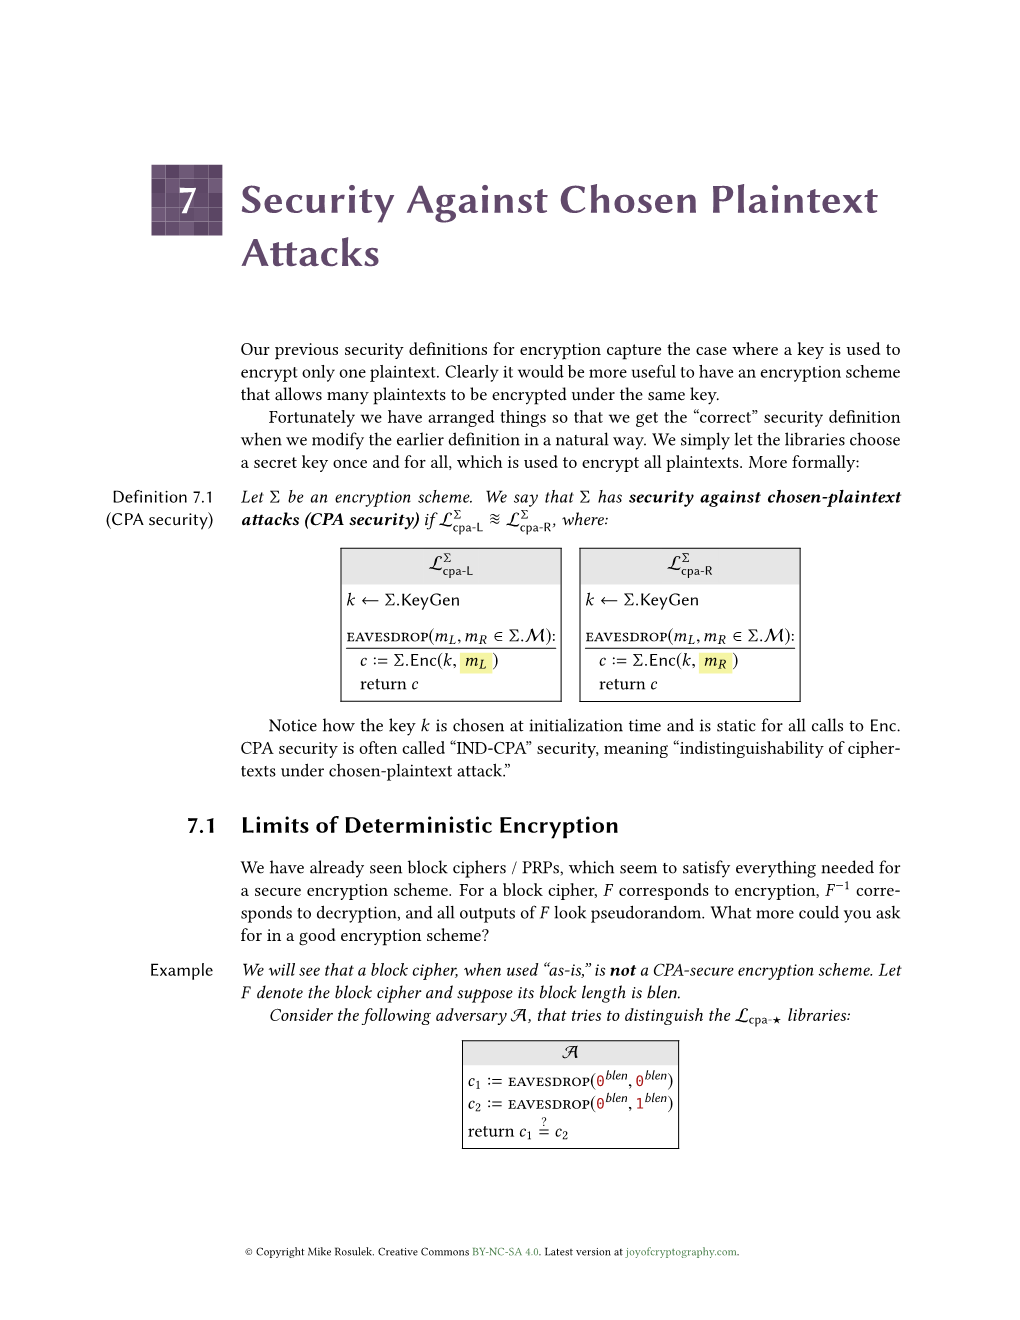 Security Against Chosen Plaintext Attacks